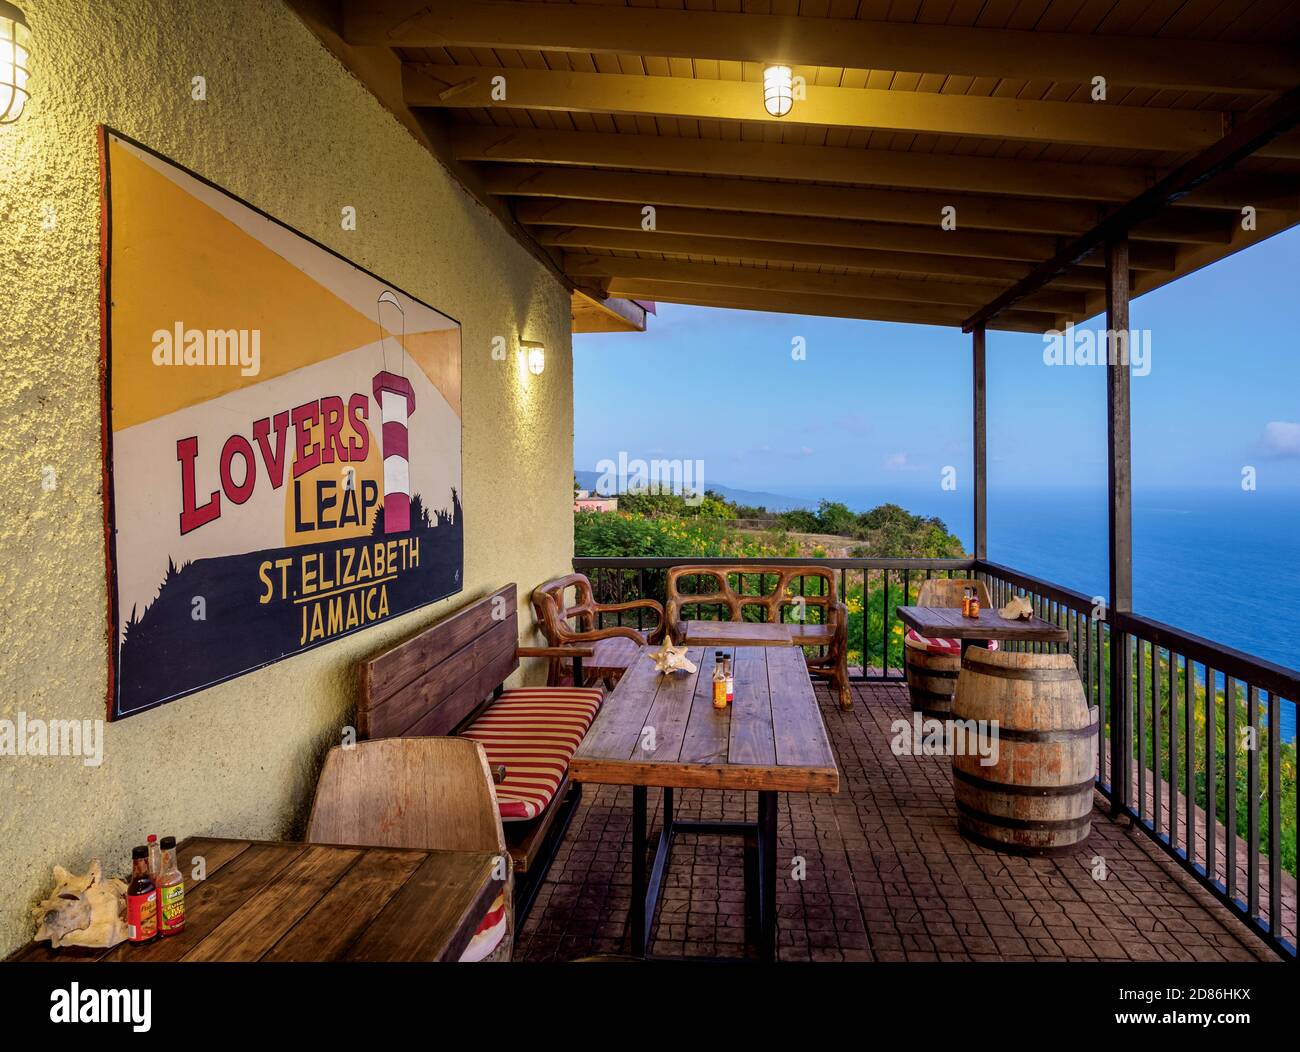 Lovers Leap Restaurant Terrace at dusk, Saint Elizabeth Parish, Jamaica Stock Photo